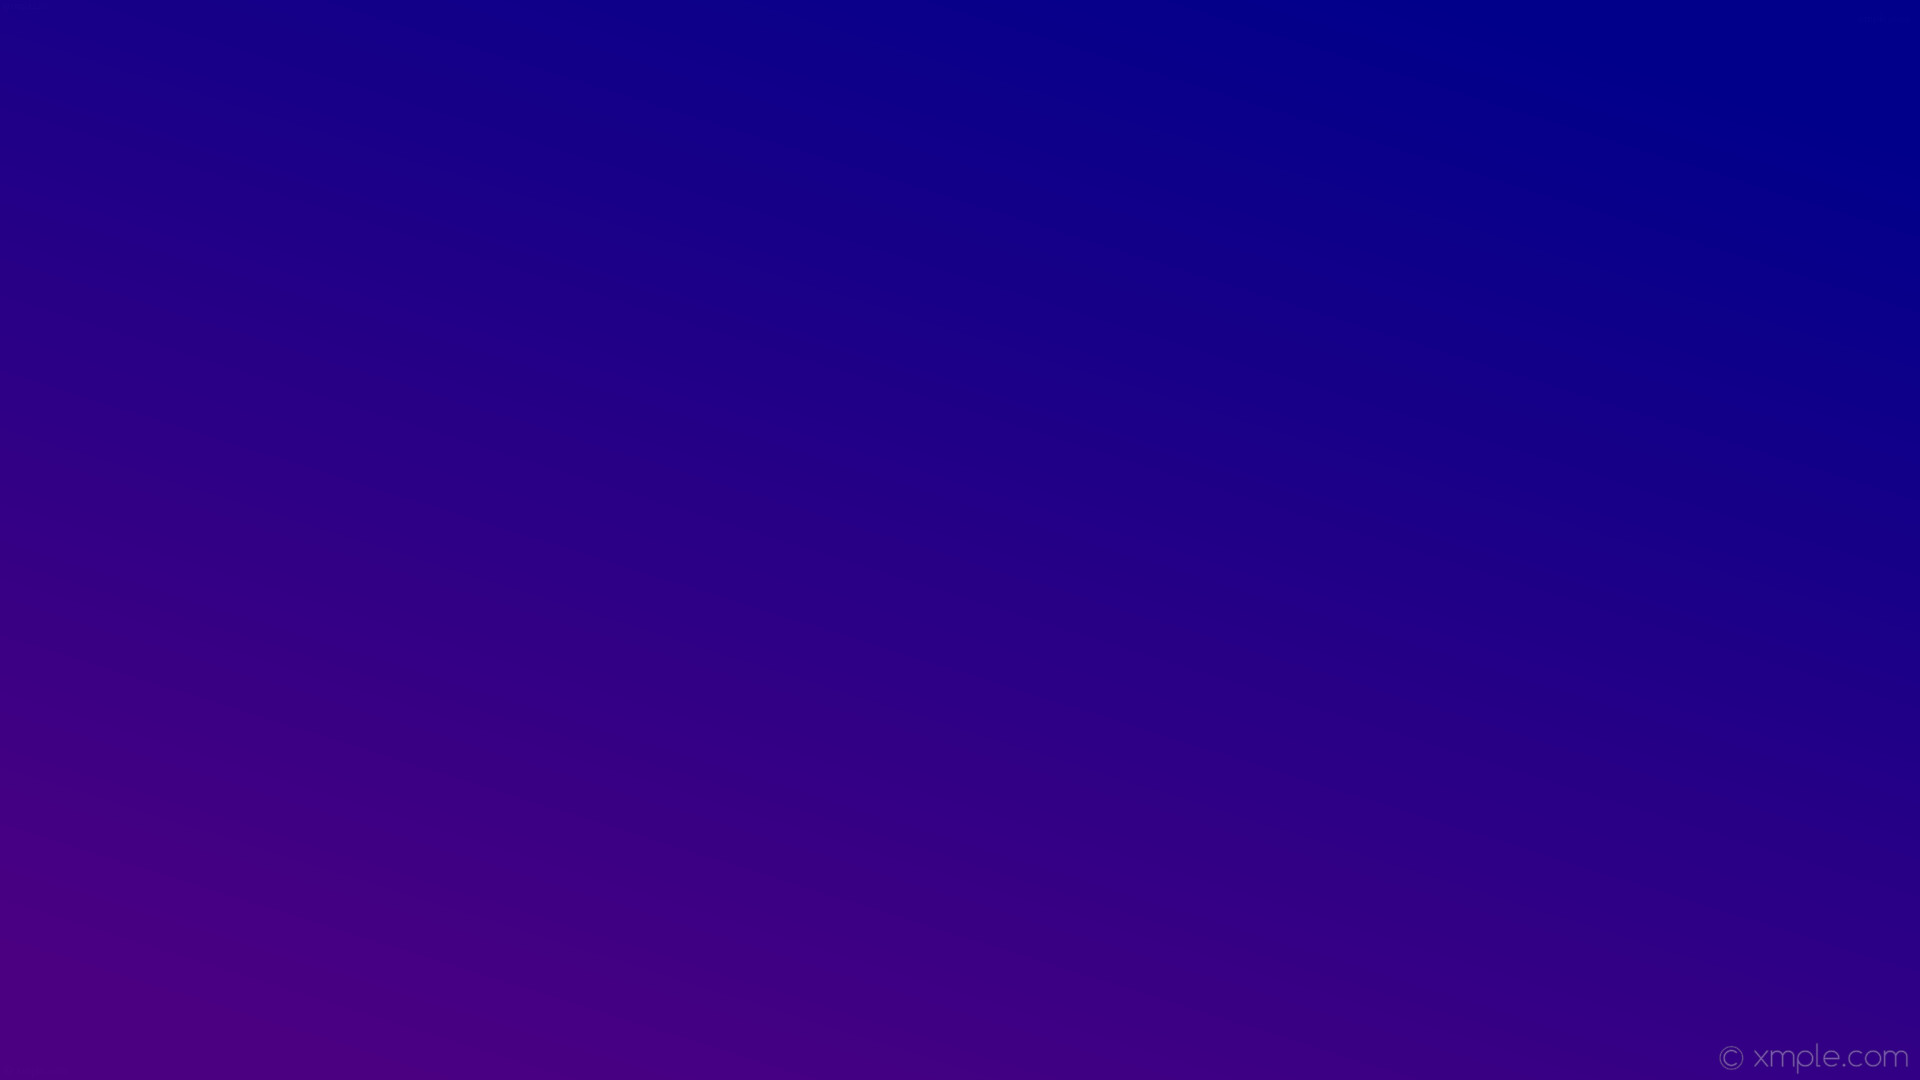 1920x1080 wallpaper gradient purple blue linear dark blue indigo #00008b #4b0082 45Â°